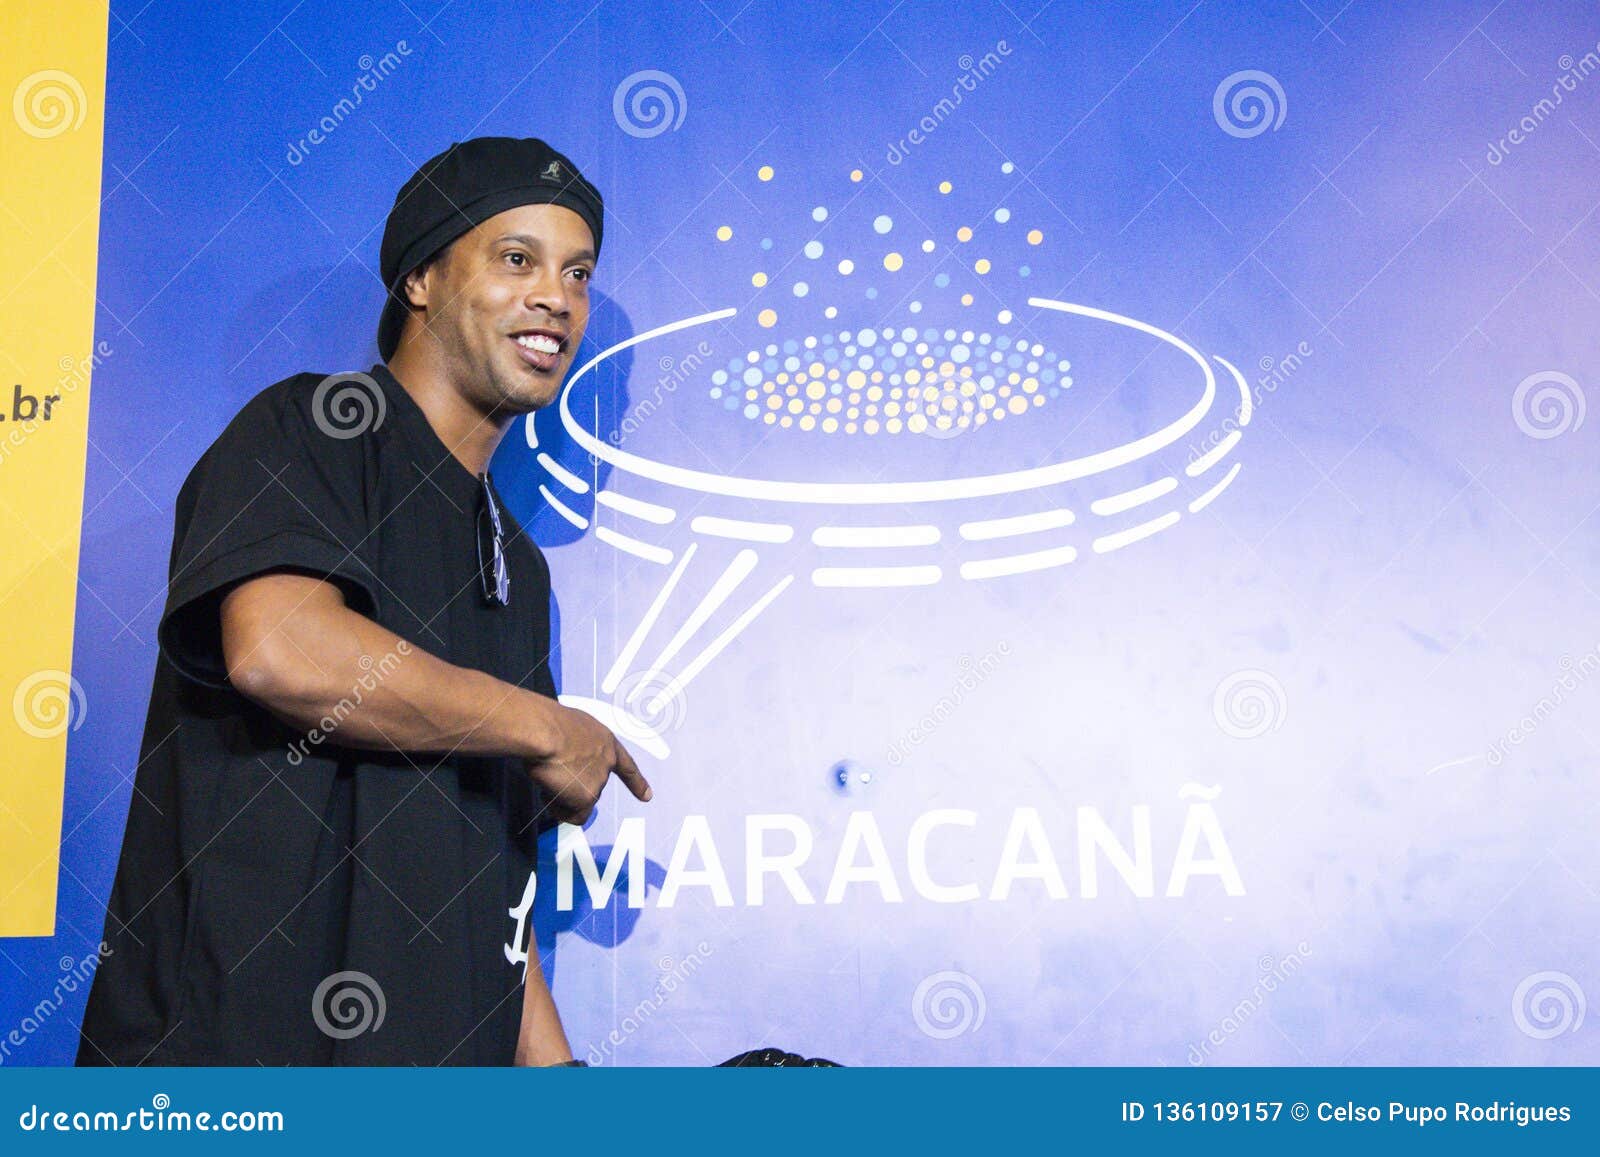 Ronaldinho - A Dica do Dia, Brazilian Culture - Rio & Learn